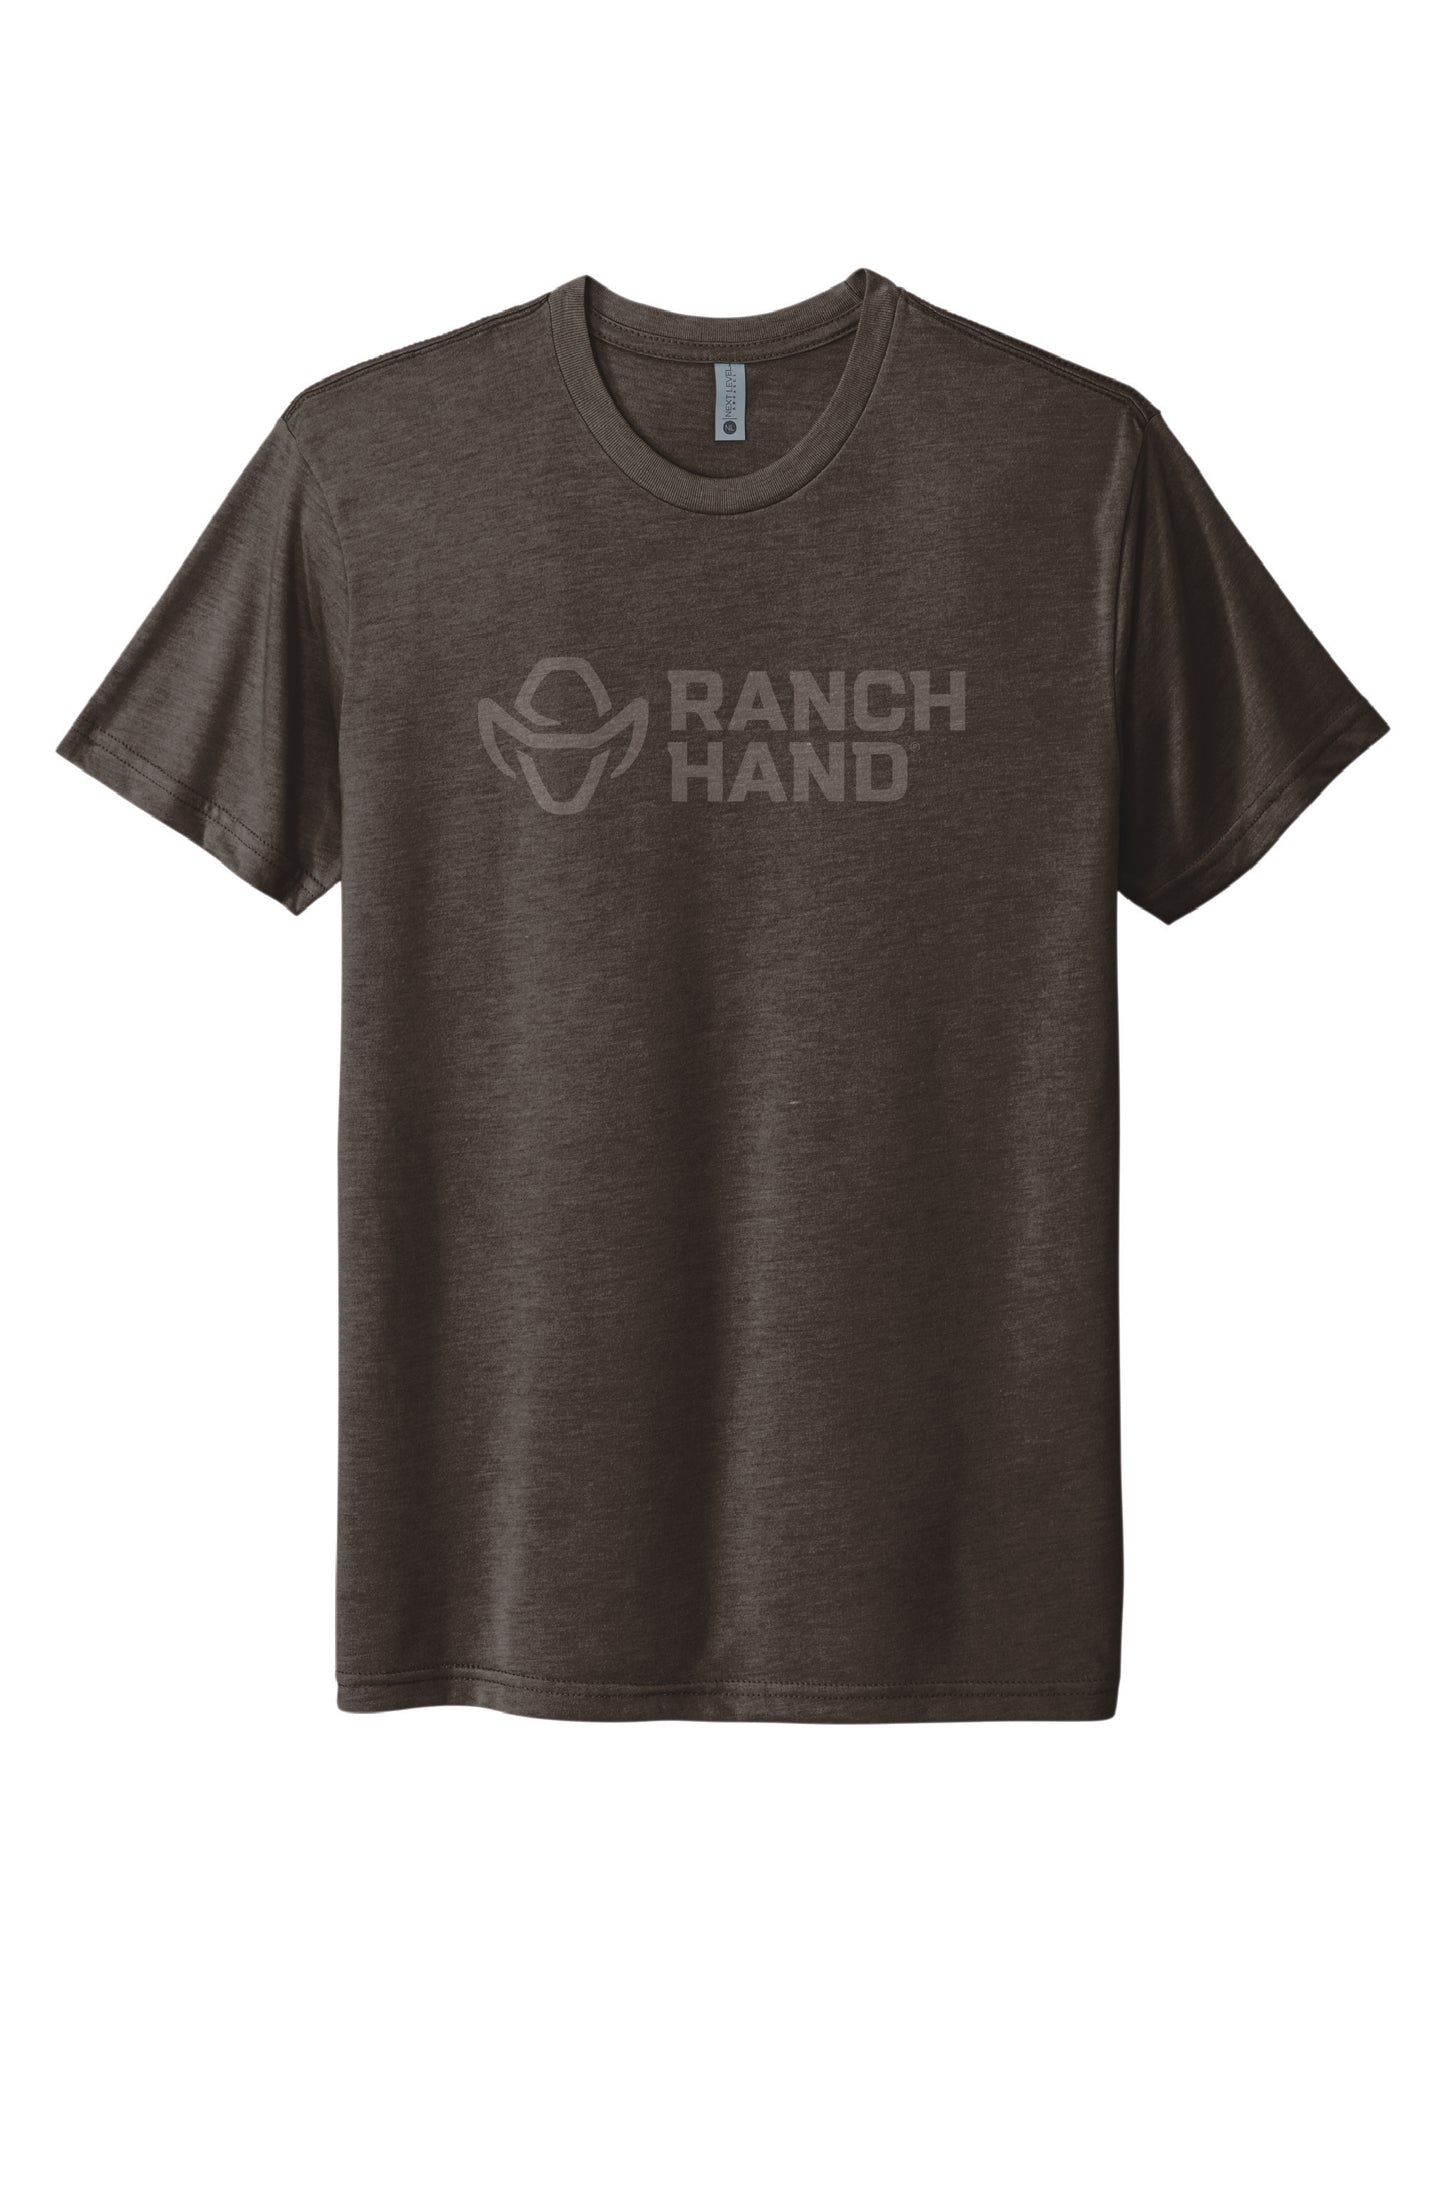 Machiatto Ranch Hand Essential T-shirt